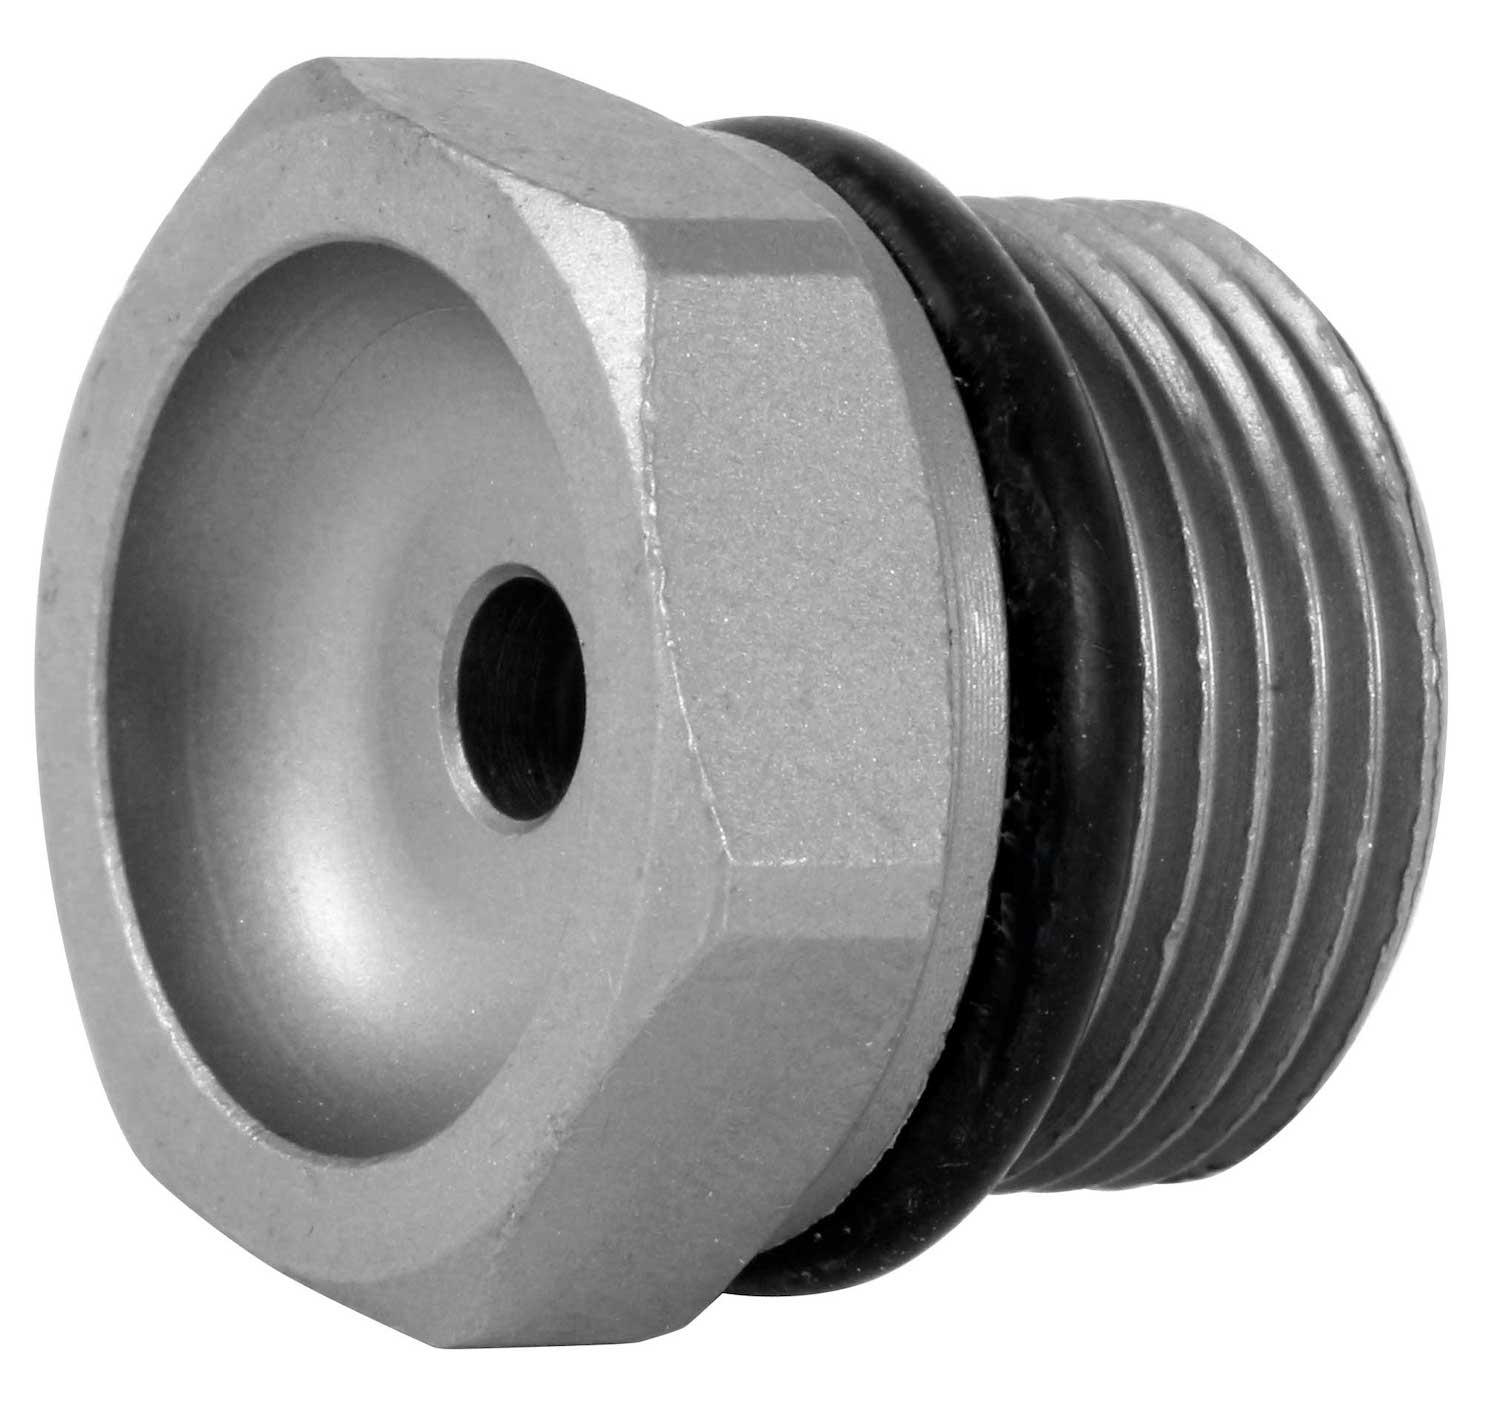 Buse inox pour lance hydro-balayage - calibre 3,0 mm